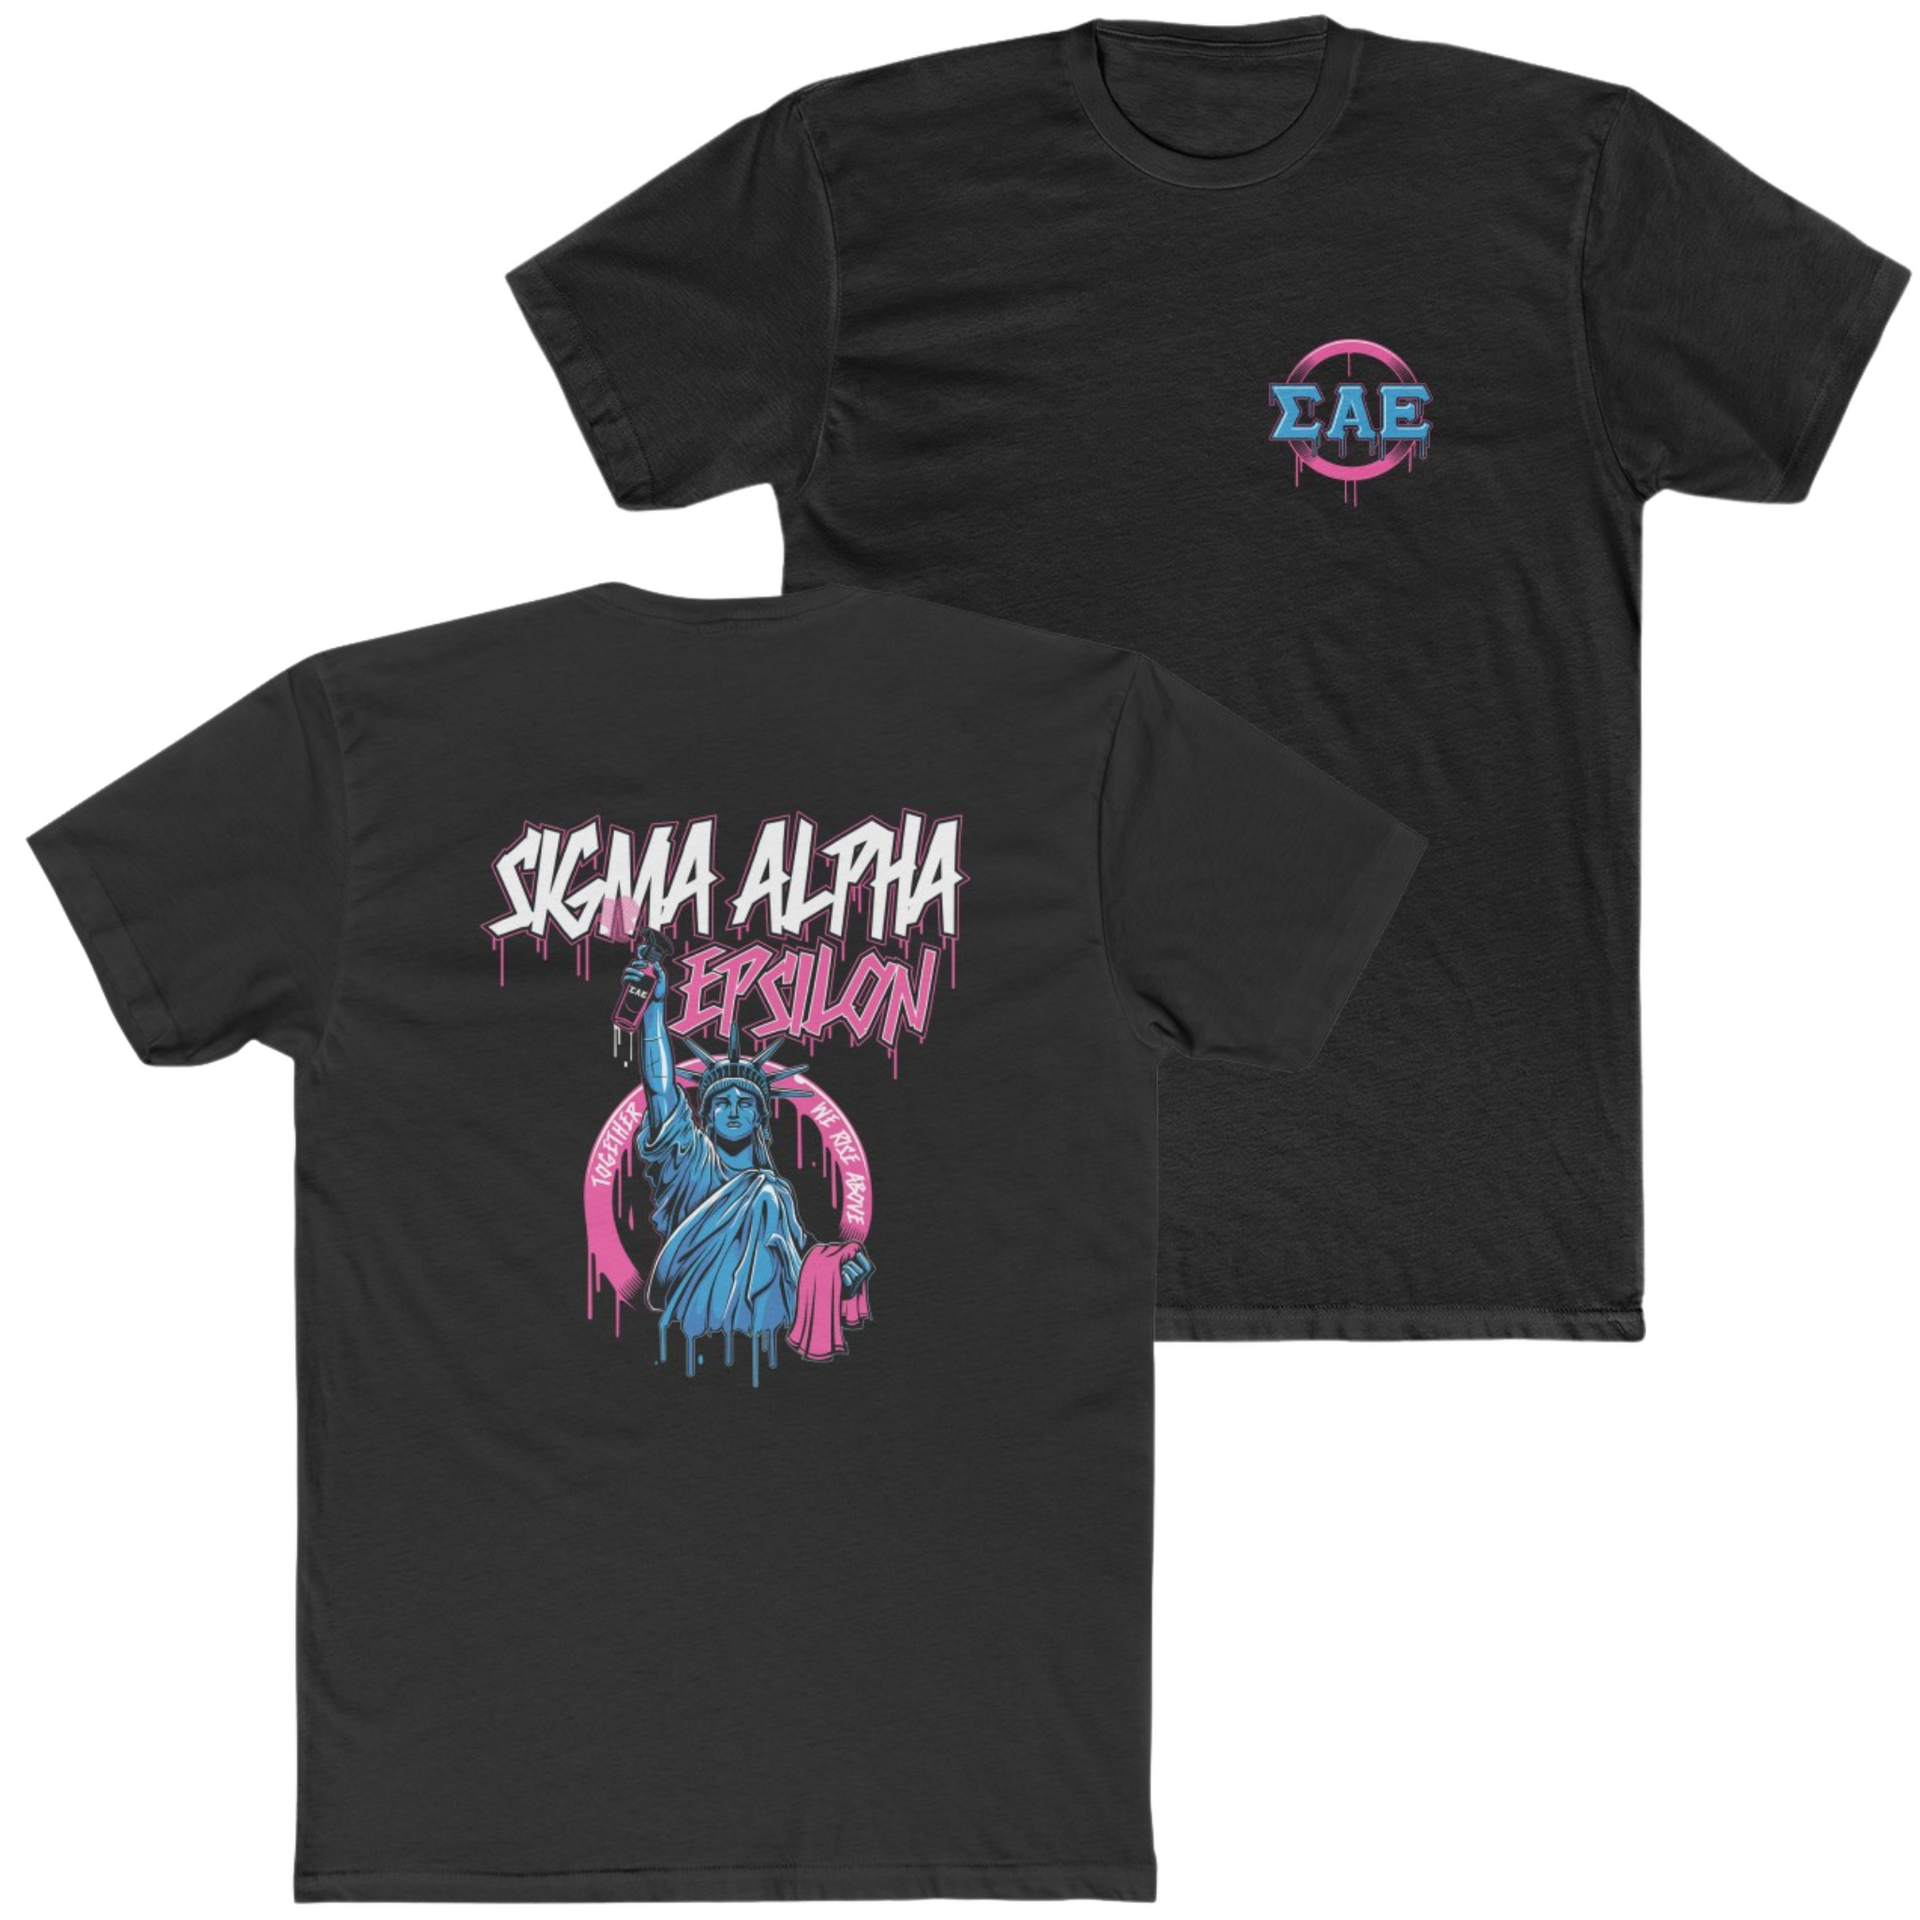 Black Sigma Alpha Epsilon Graphic T-Shirt | Liberty Rebel | Sigma Alpha Epsilon Clothing and Merchandise